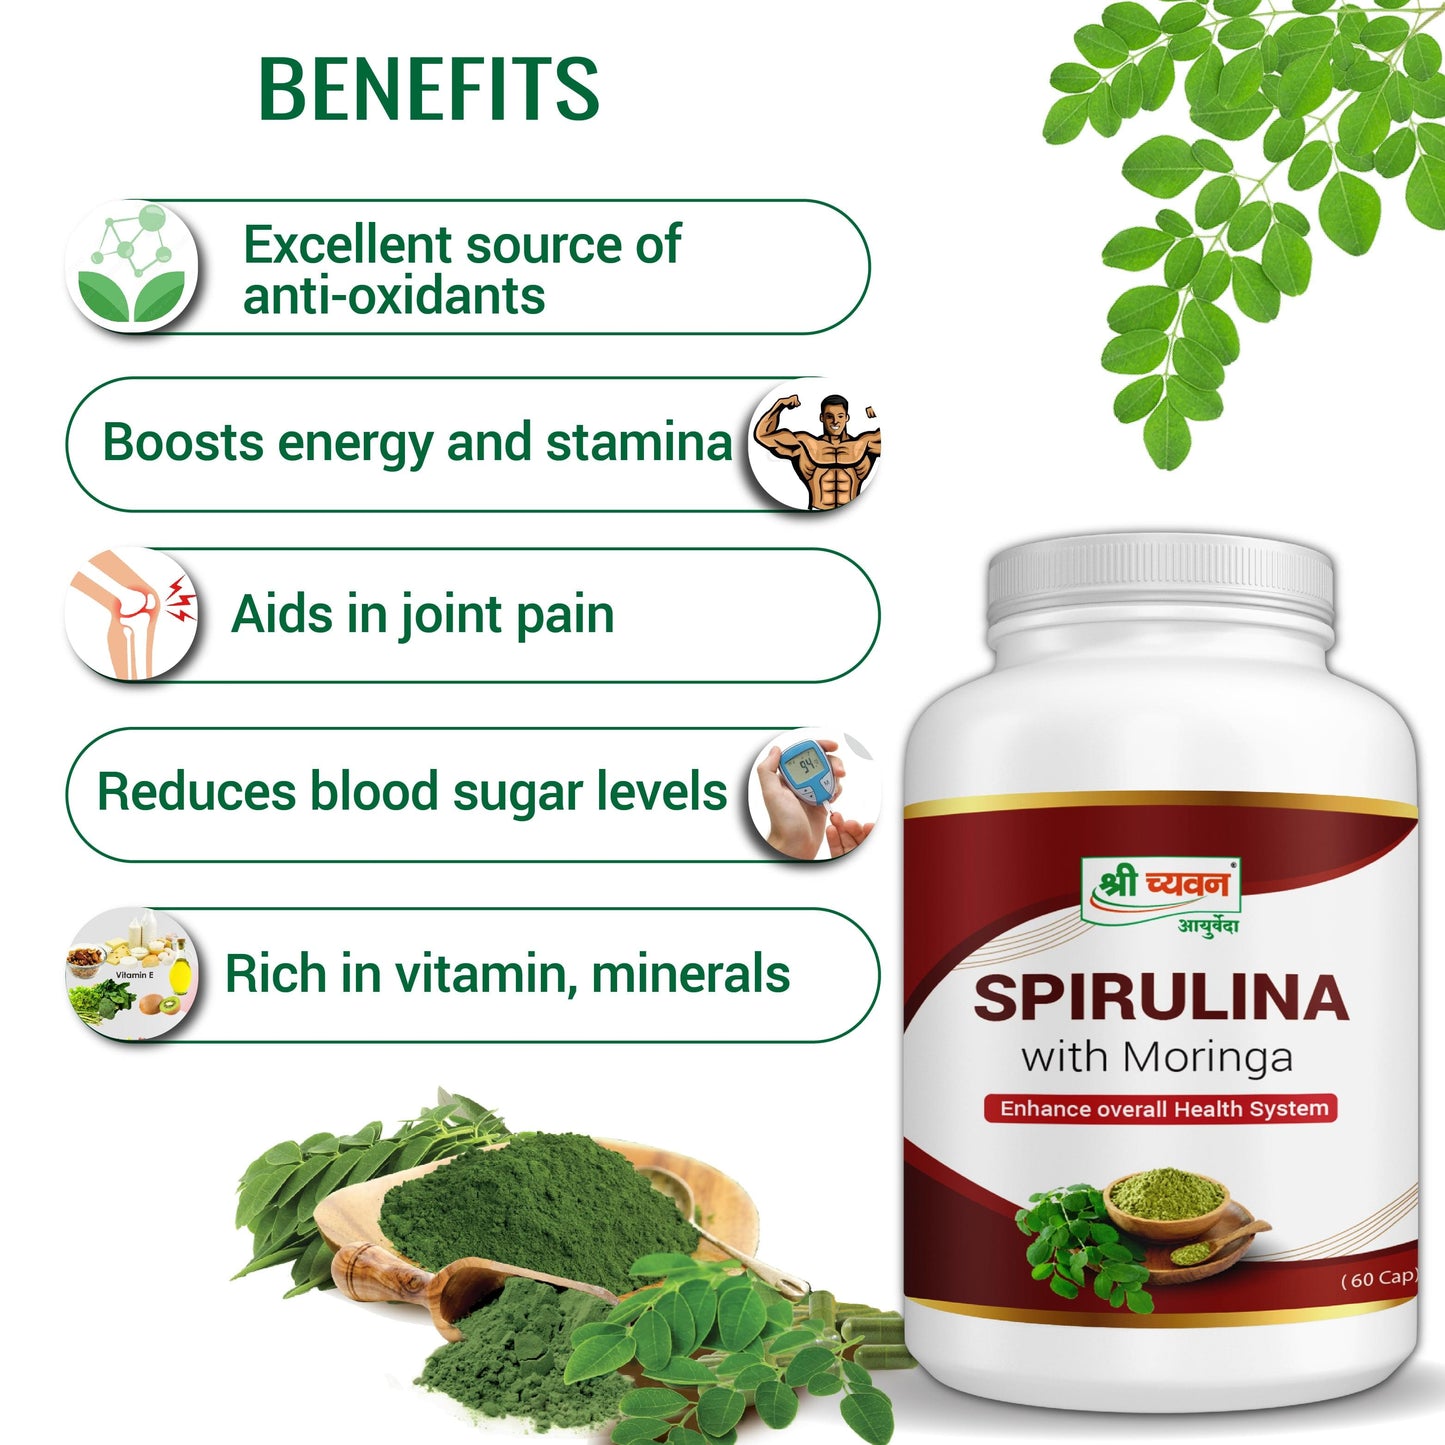 Spirulina Capsules Moringa Benefits